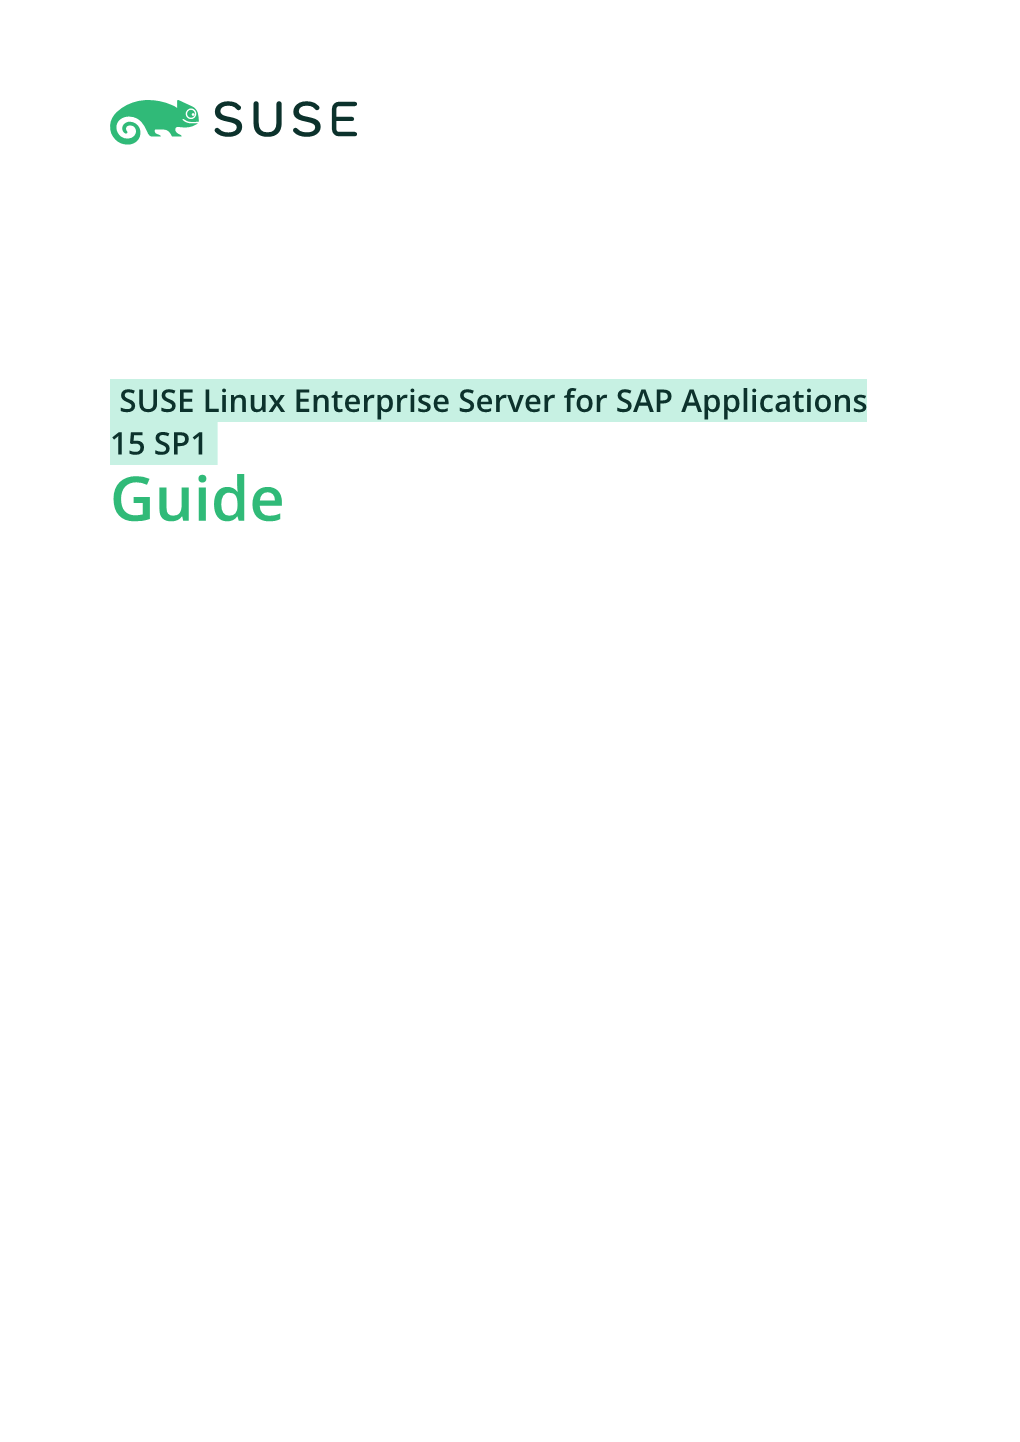 SUSE Linux Enterprise Server for SAP Applications 15 SP1 Guide Guide SUSE Linux Enterprise Server for SAP Applications 15 SP1